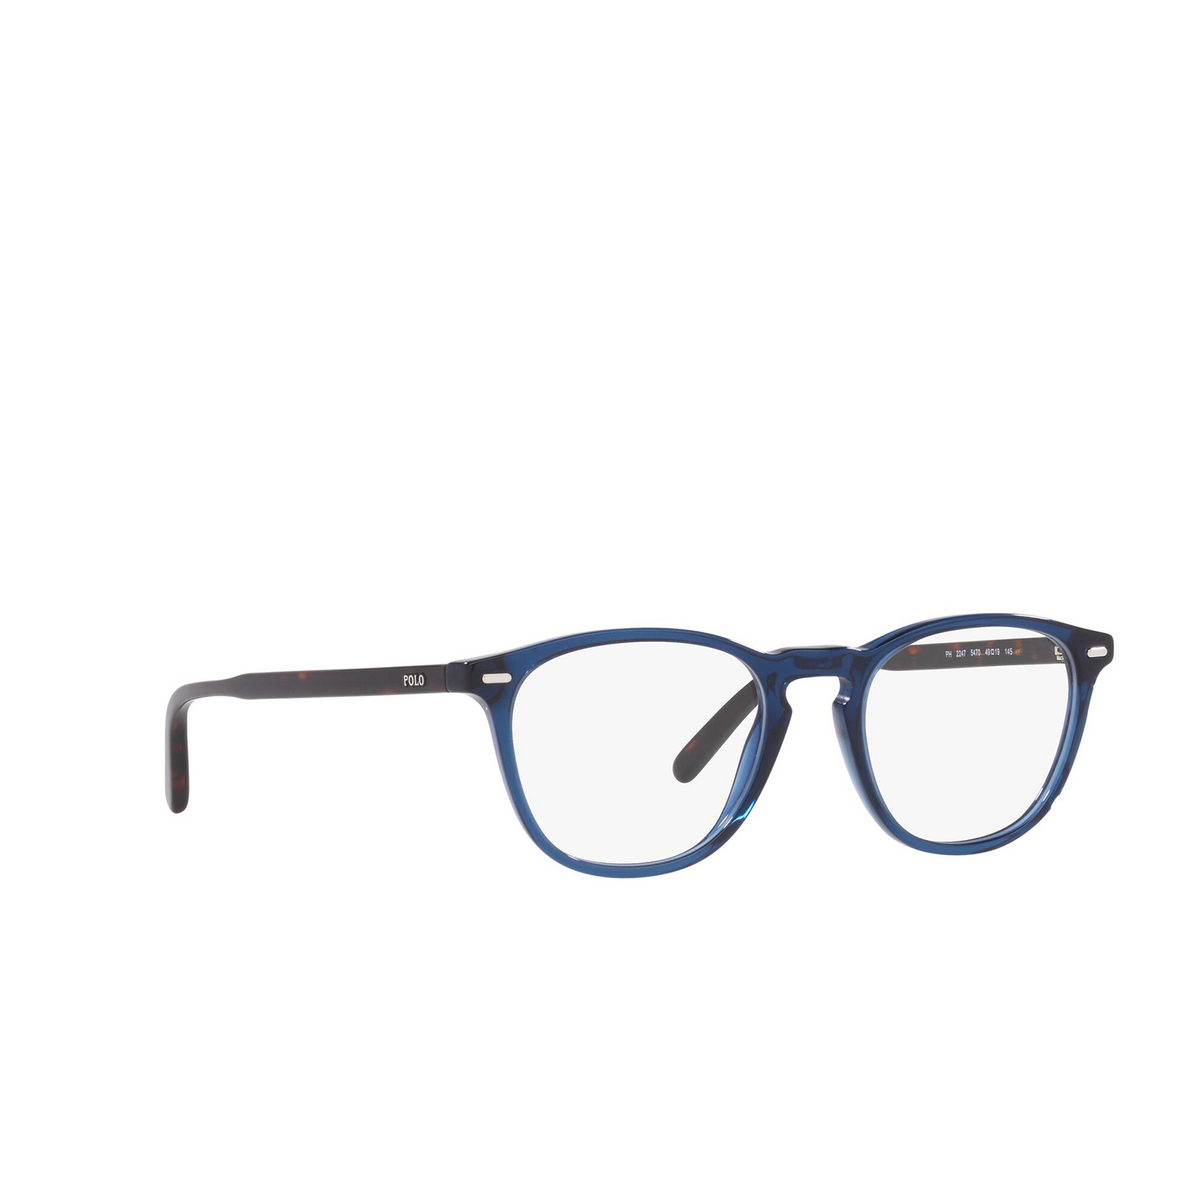 Polo Ralph Lauren® Square Eyeglasses: PH2247 color Shiny Transp Navy Blue 5470 - three-quarters view.